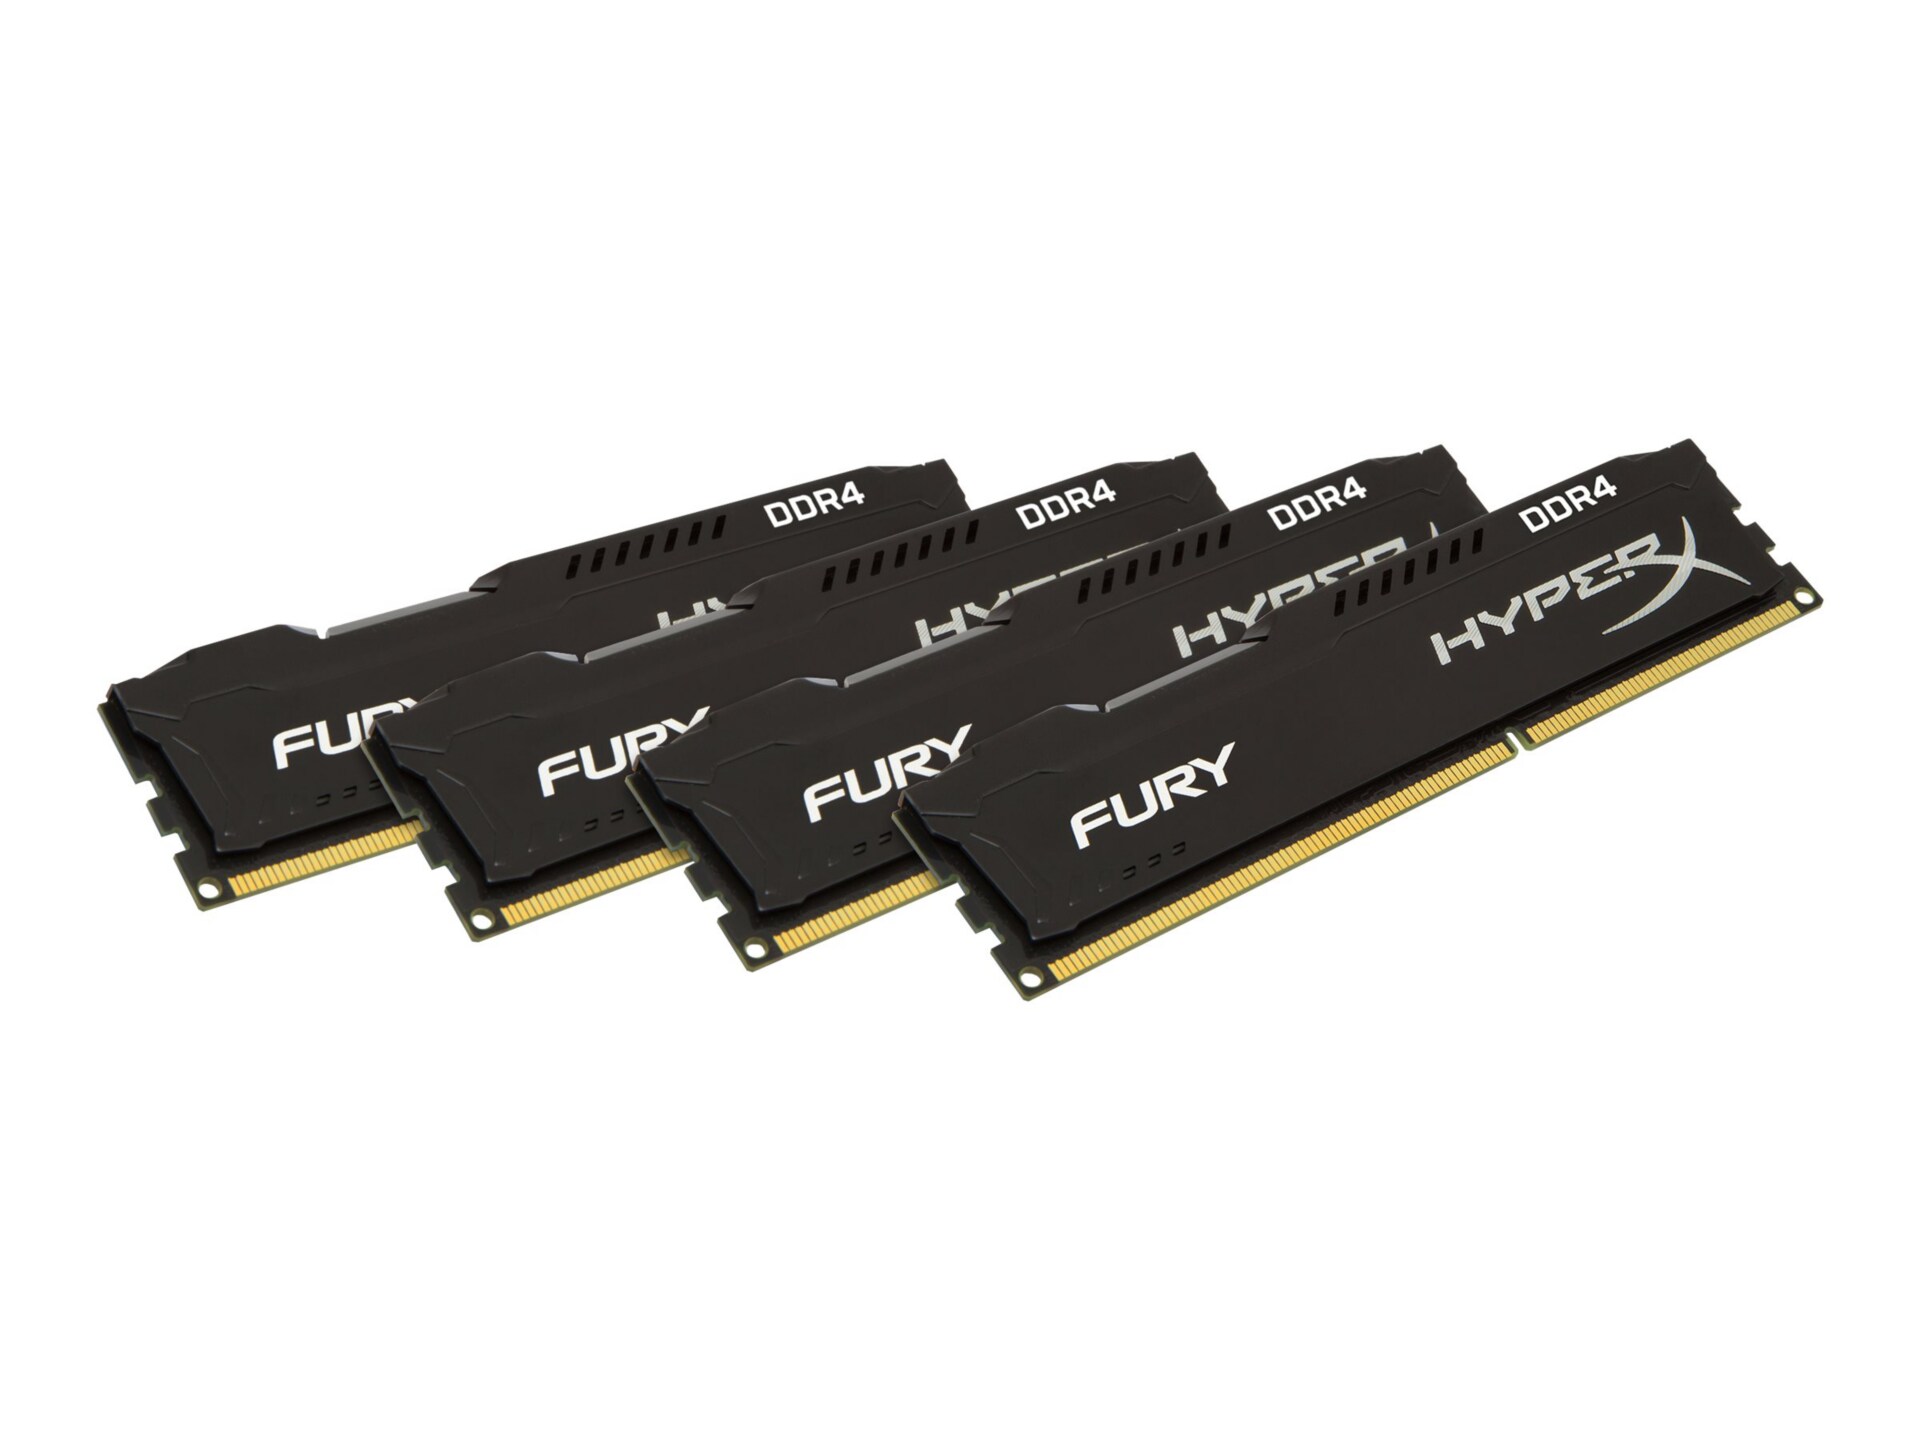 HyperX FURY - DDR4 - kit - 64 GB: 4 x 16 GB - DIMM 288-pin - 2400 MHz / PC4